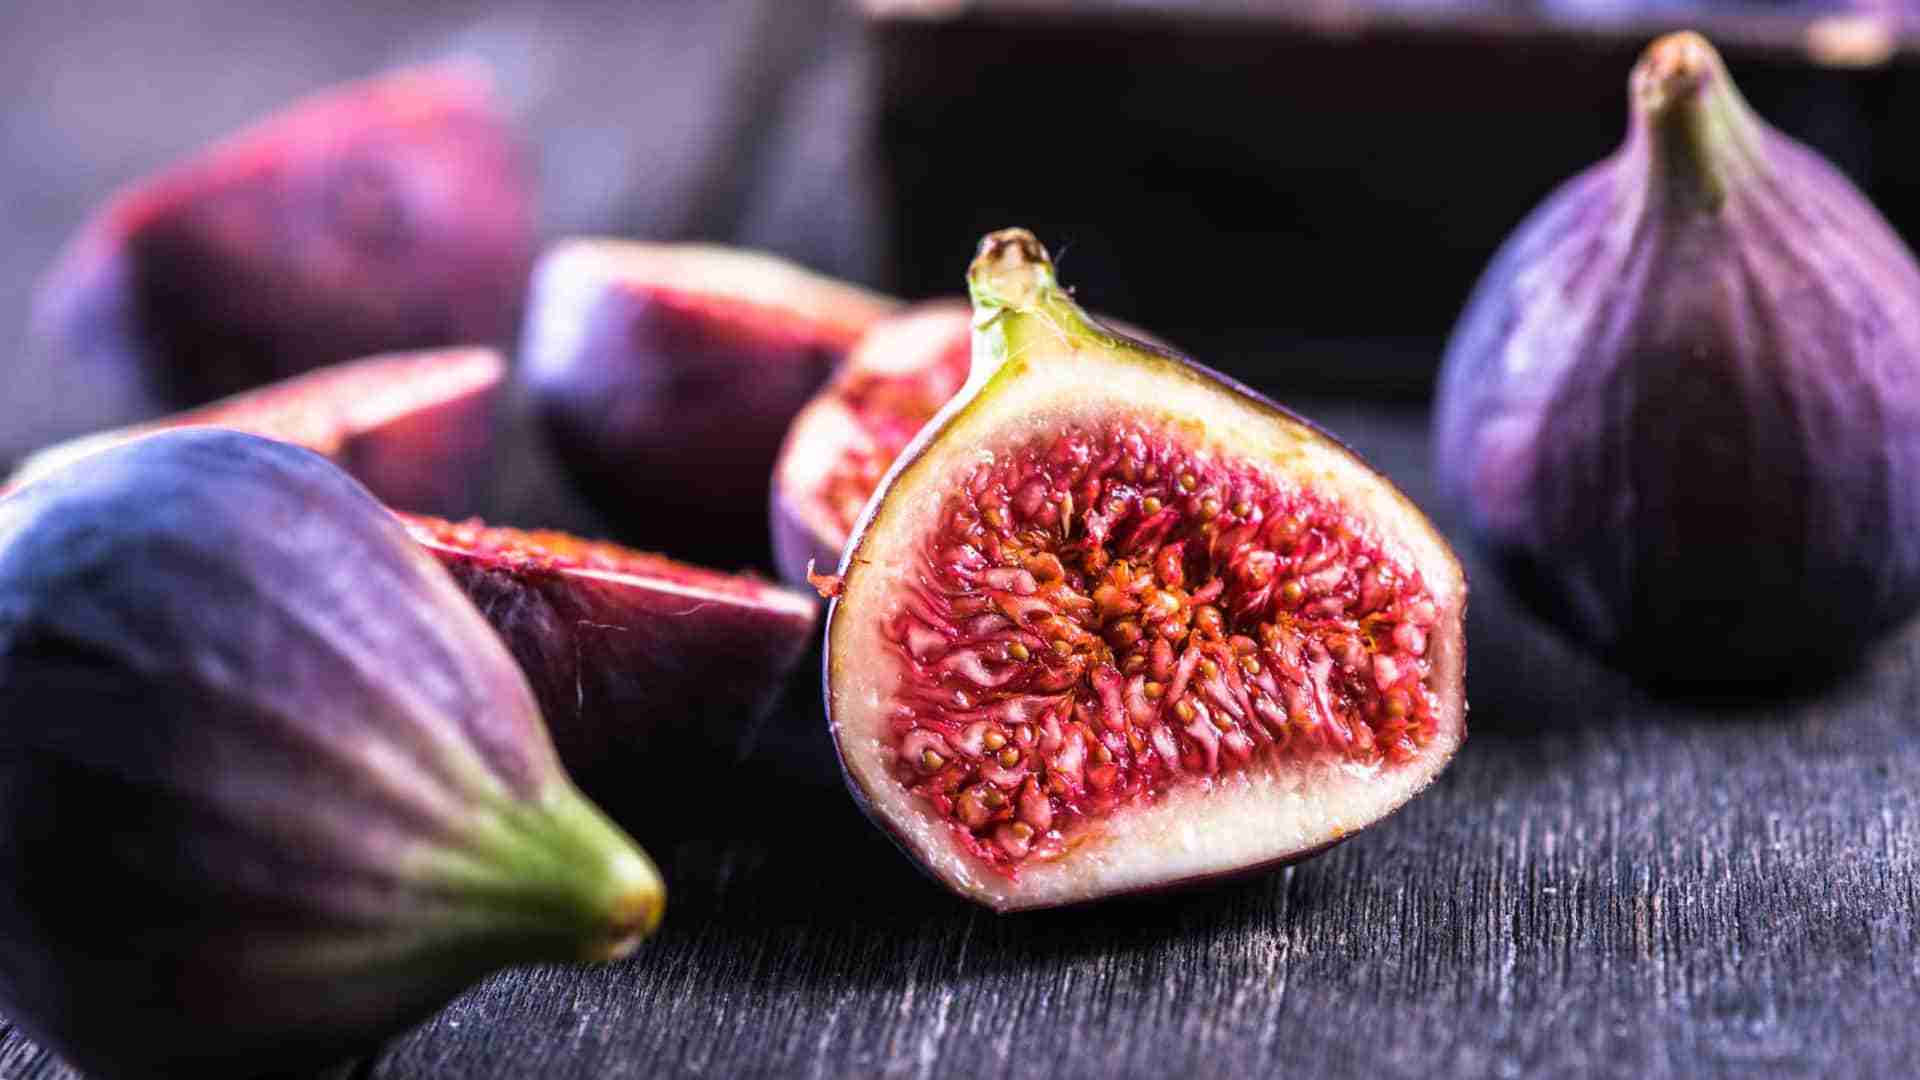 Organic black mission figs